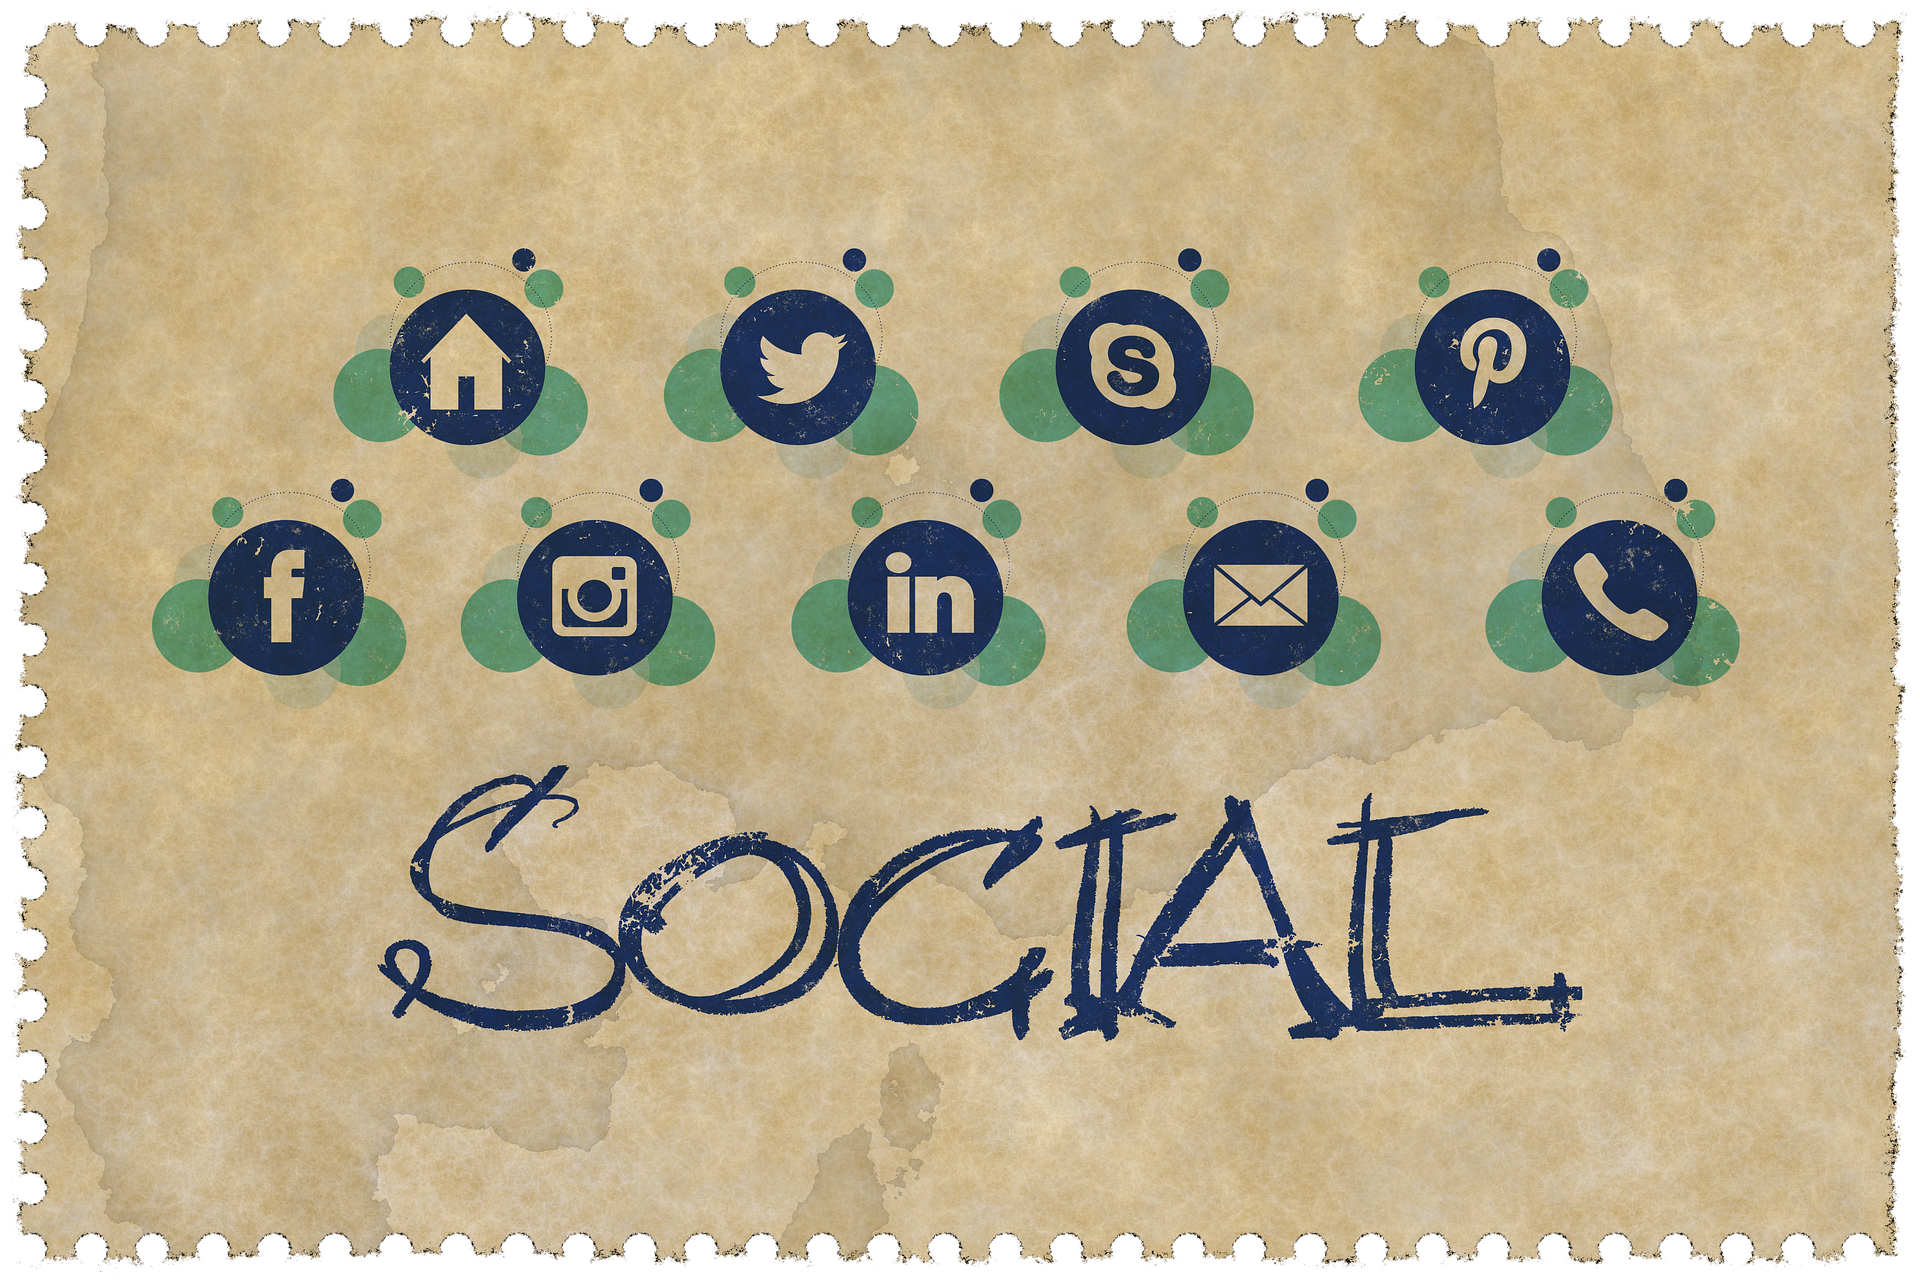 Image has the word social and a variety of social media logos displayed